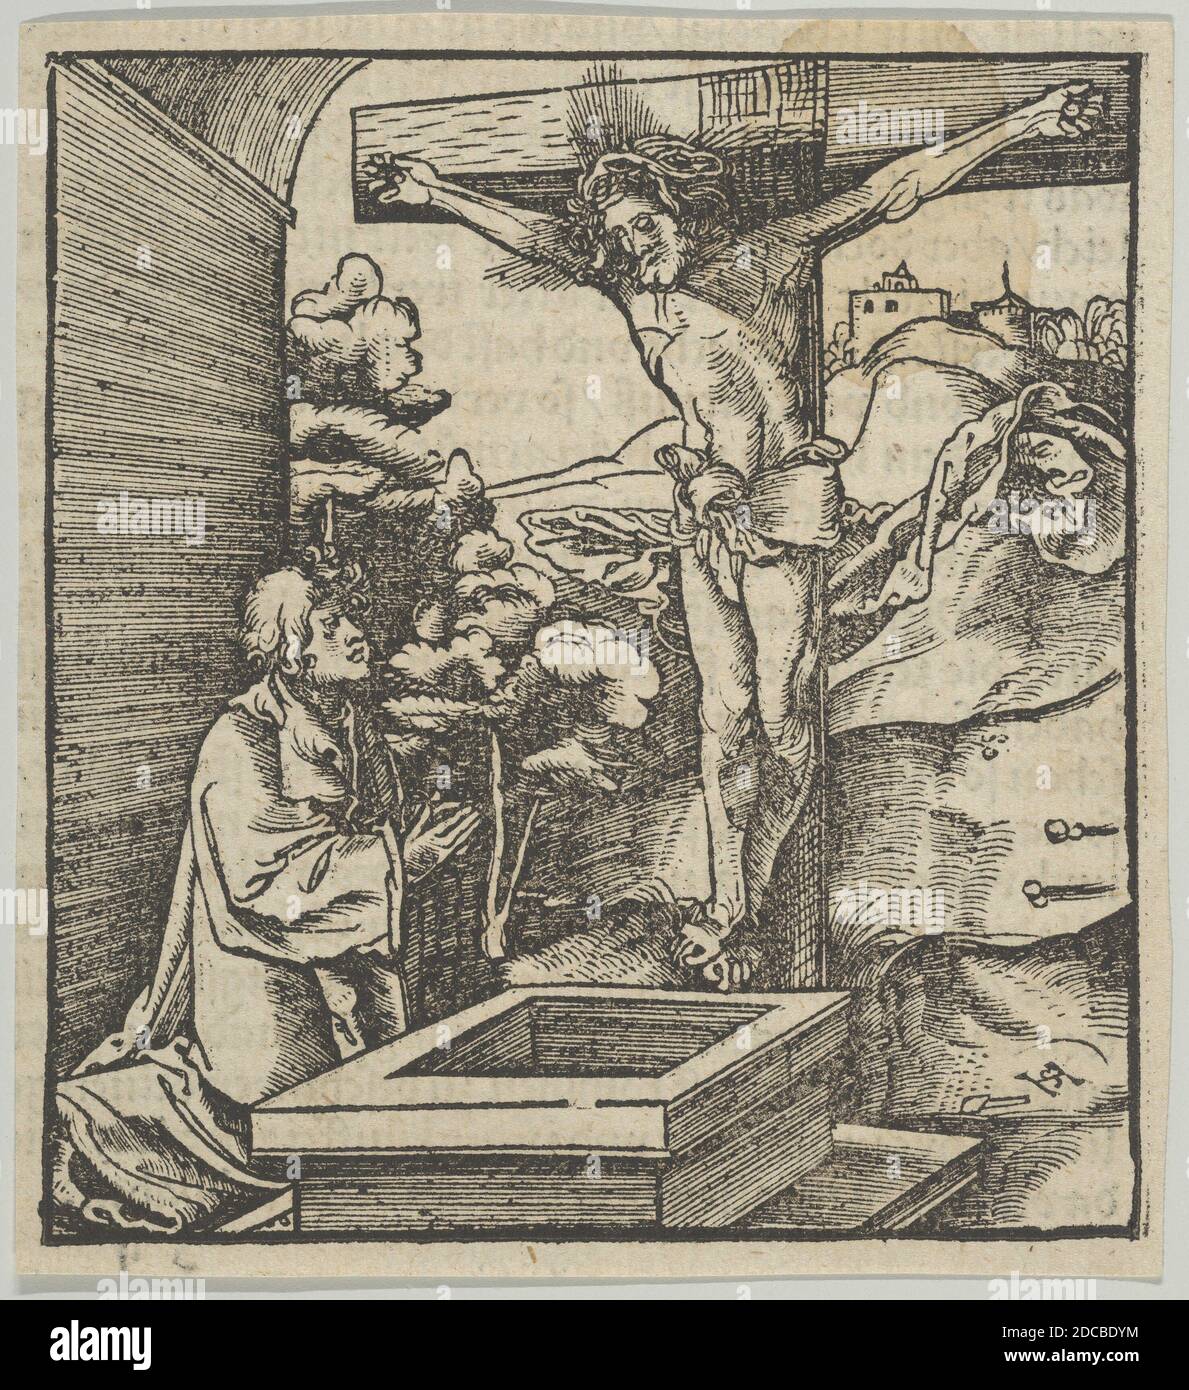 A Man Praying before a Crucifix, from Hymmelwagen auff dem, wer wol lebt..., 1517. Stock Photo